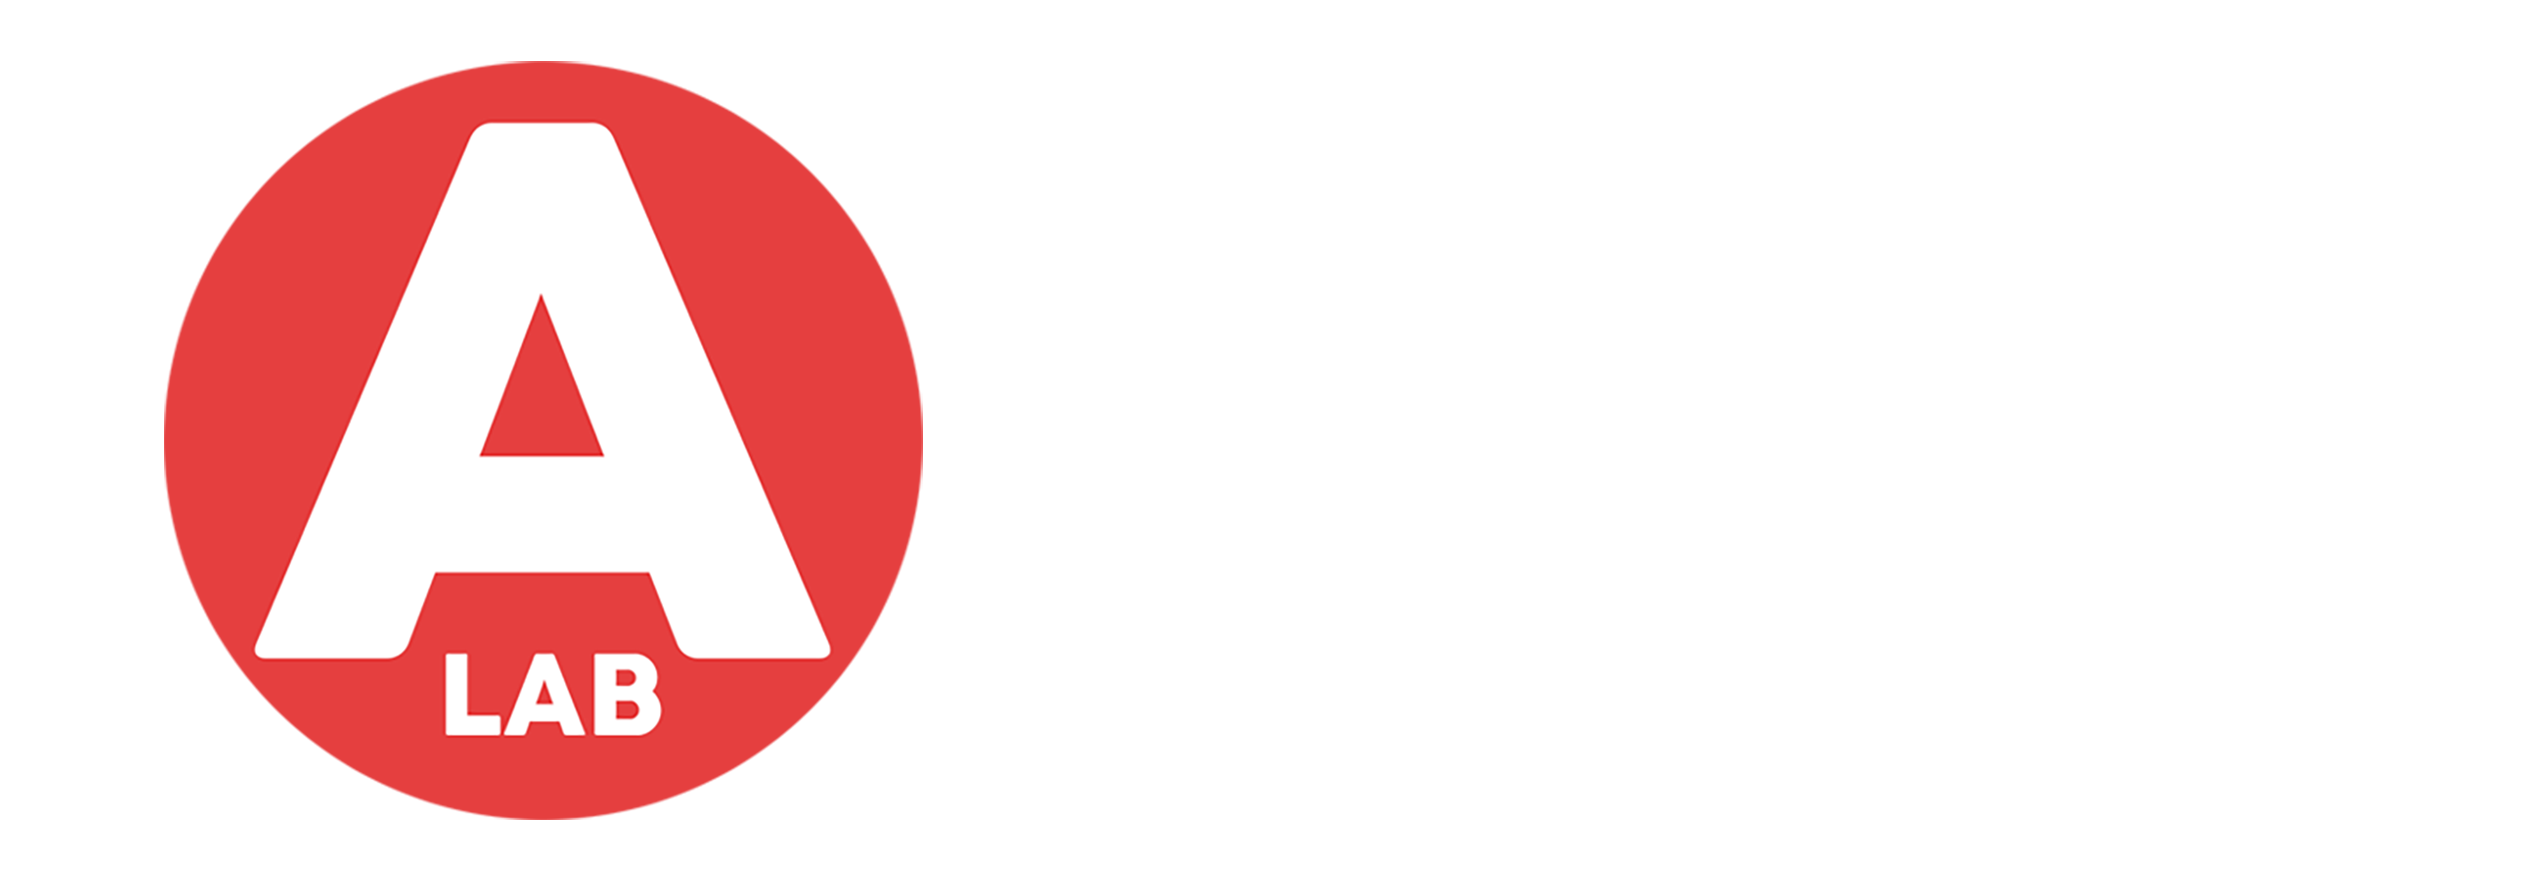 ARTlab